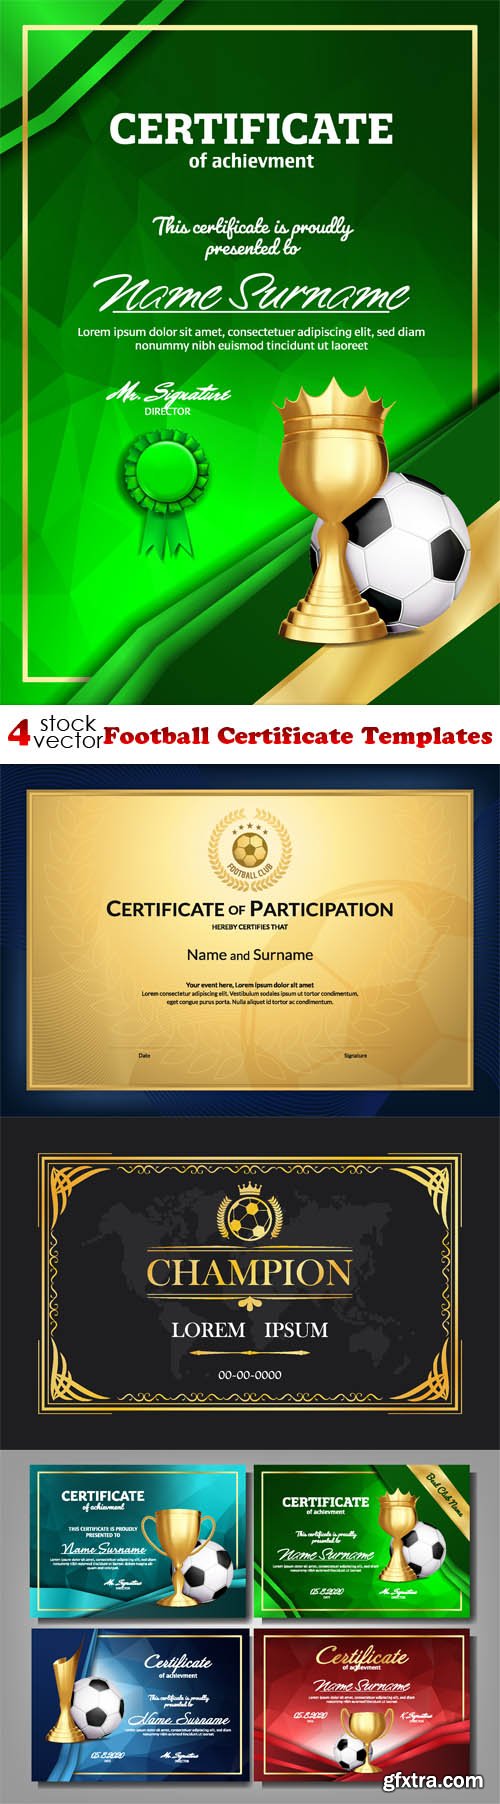 Vectors - Football Certificate Templates